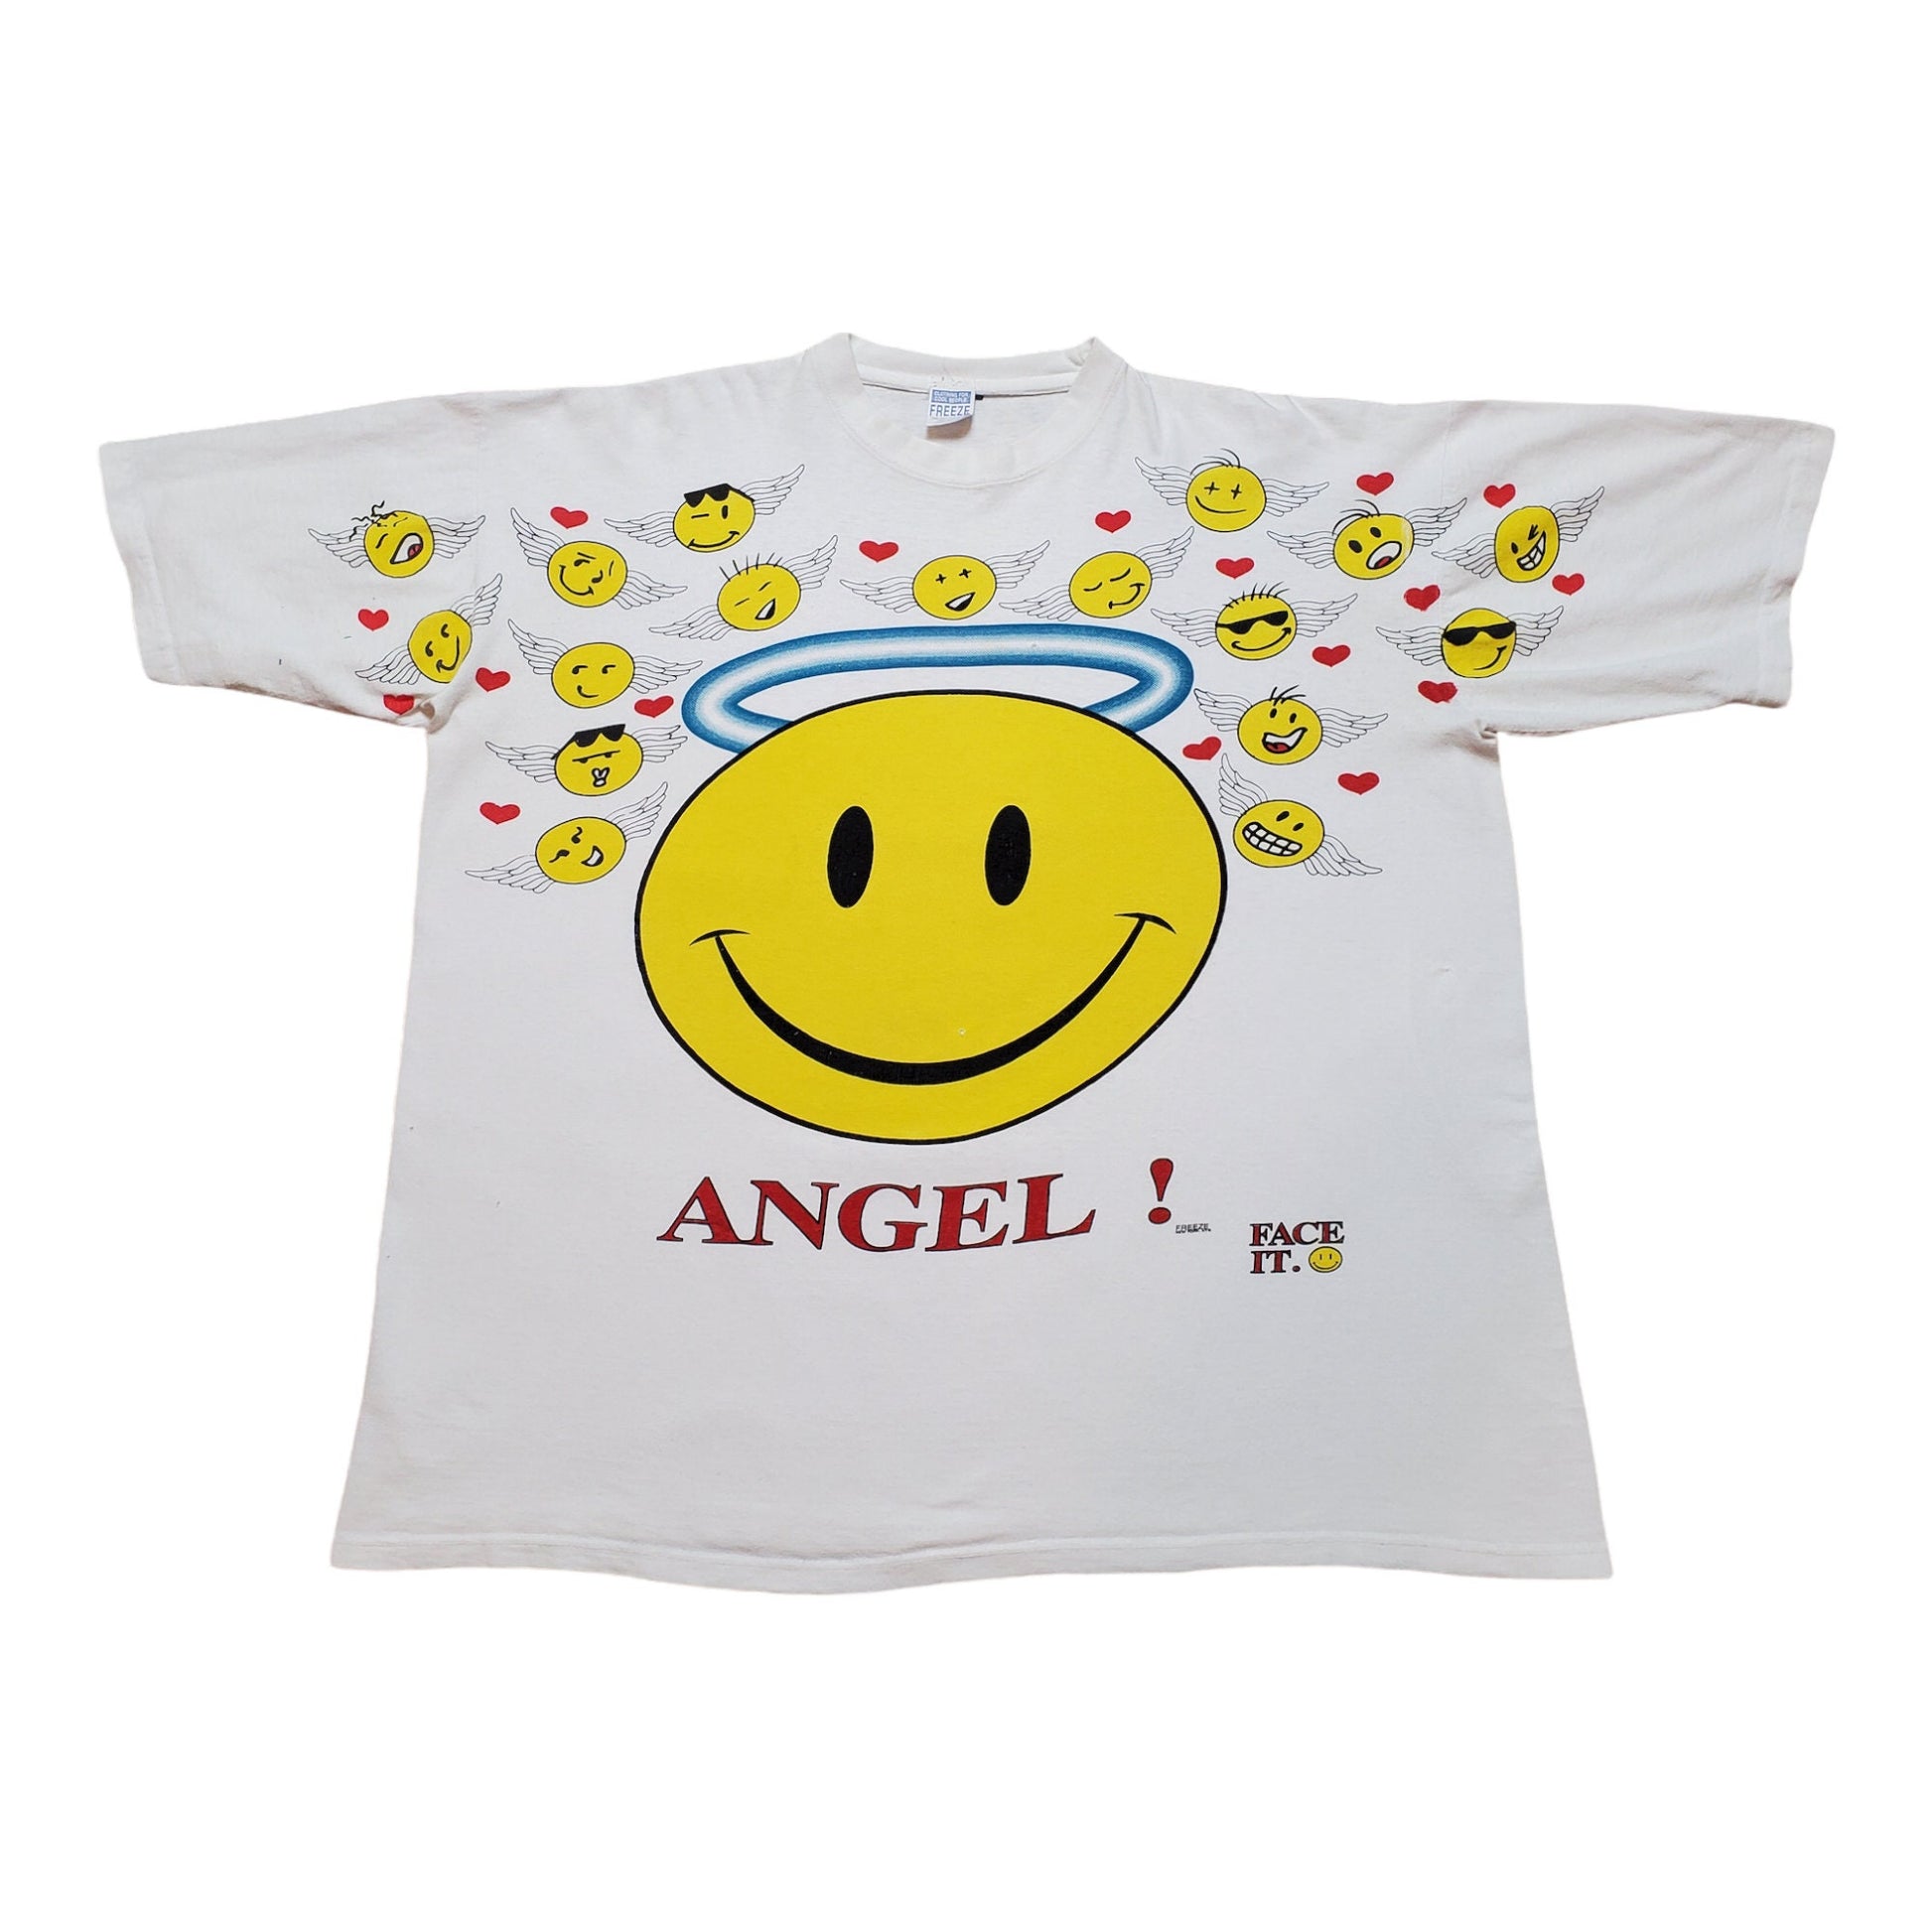 1990s/2000s Freeze Face It Angel Smiley Face T-Shirt Size XL/XXL